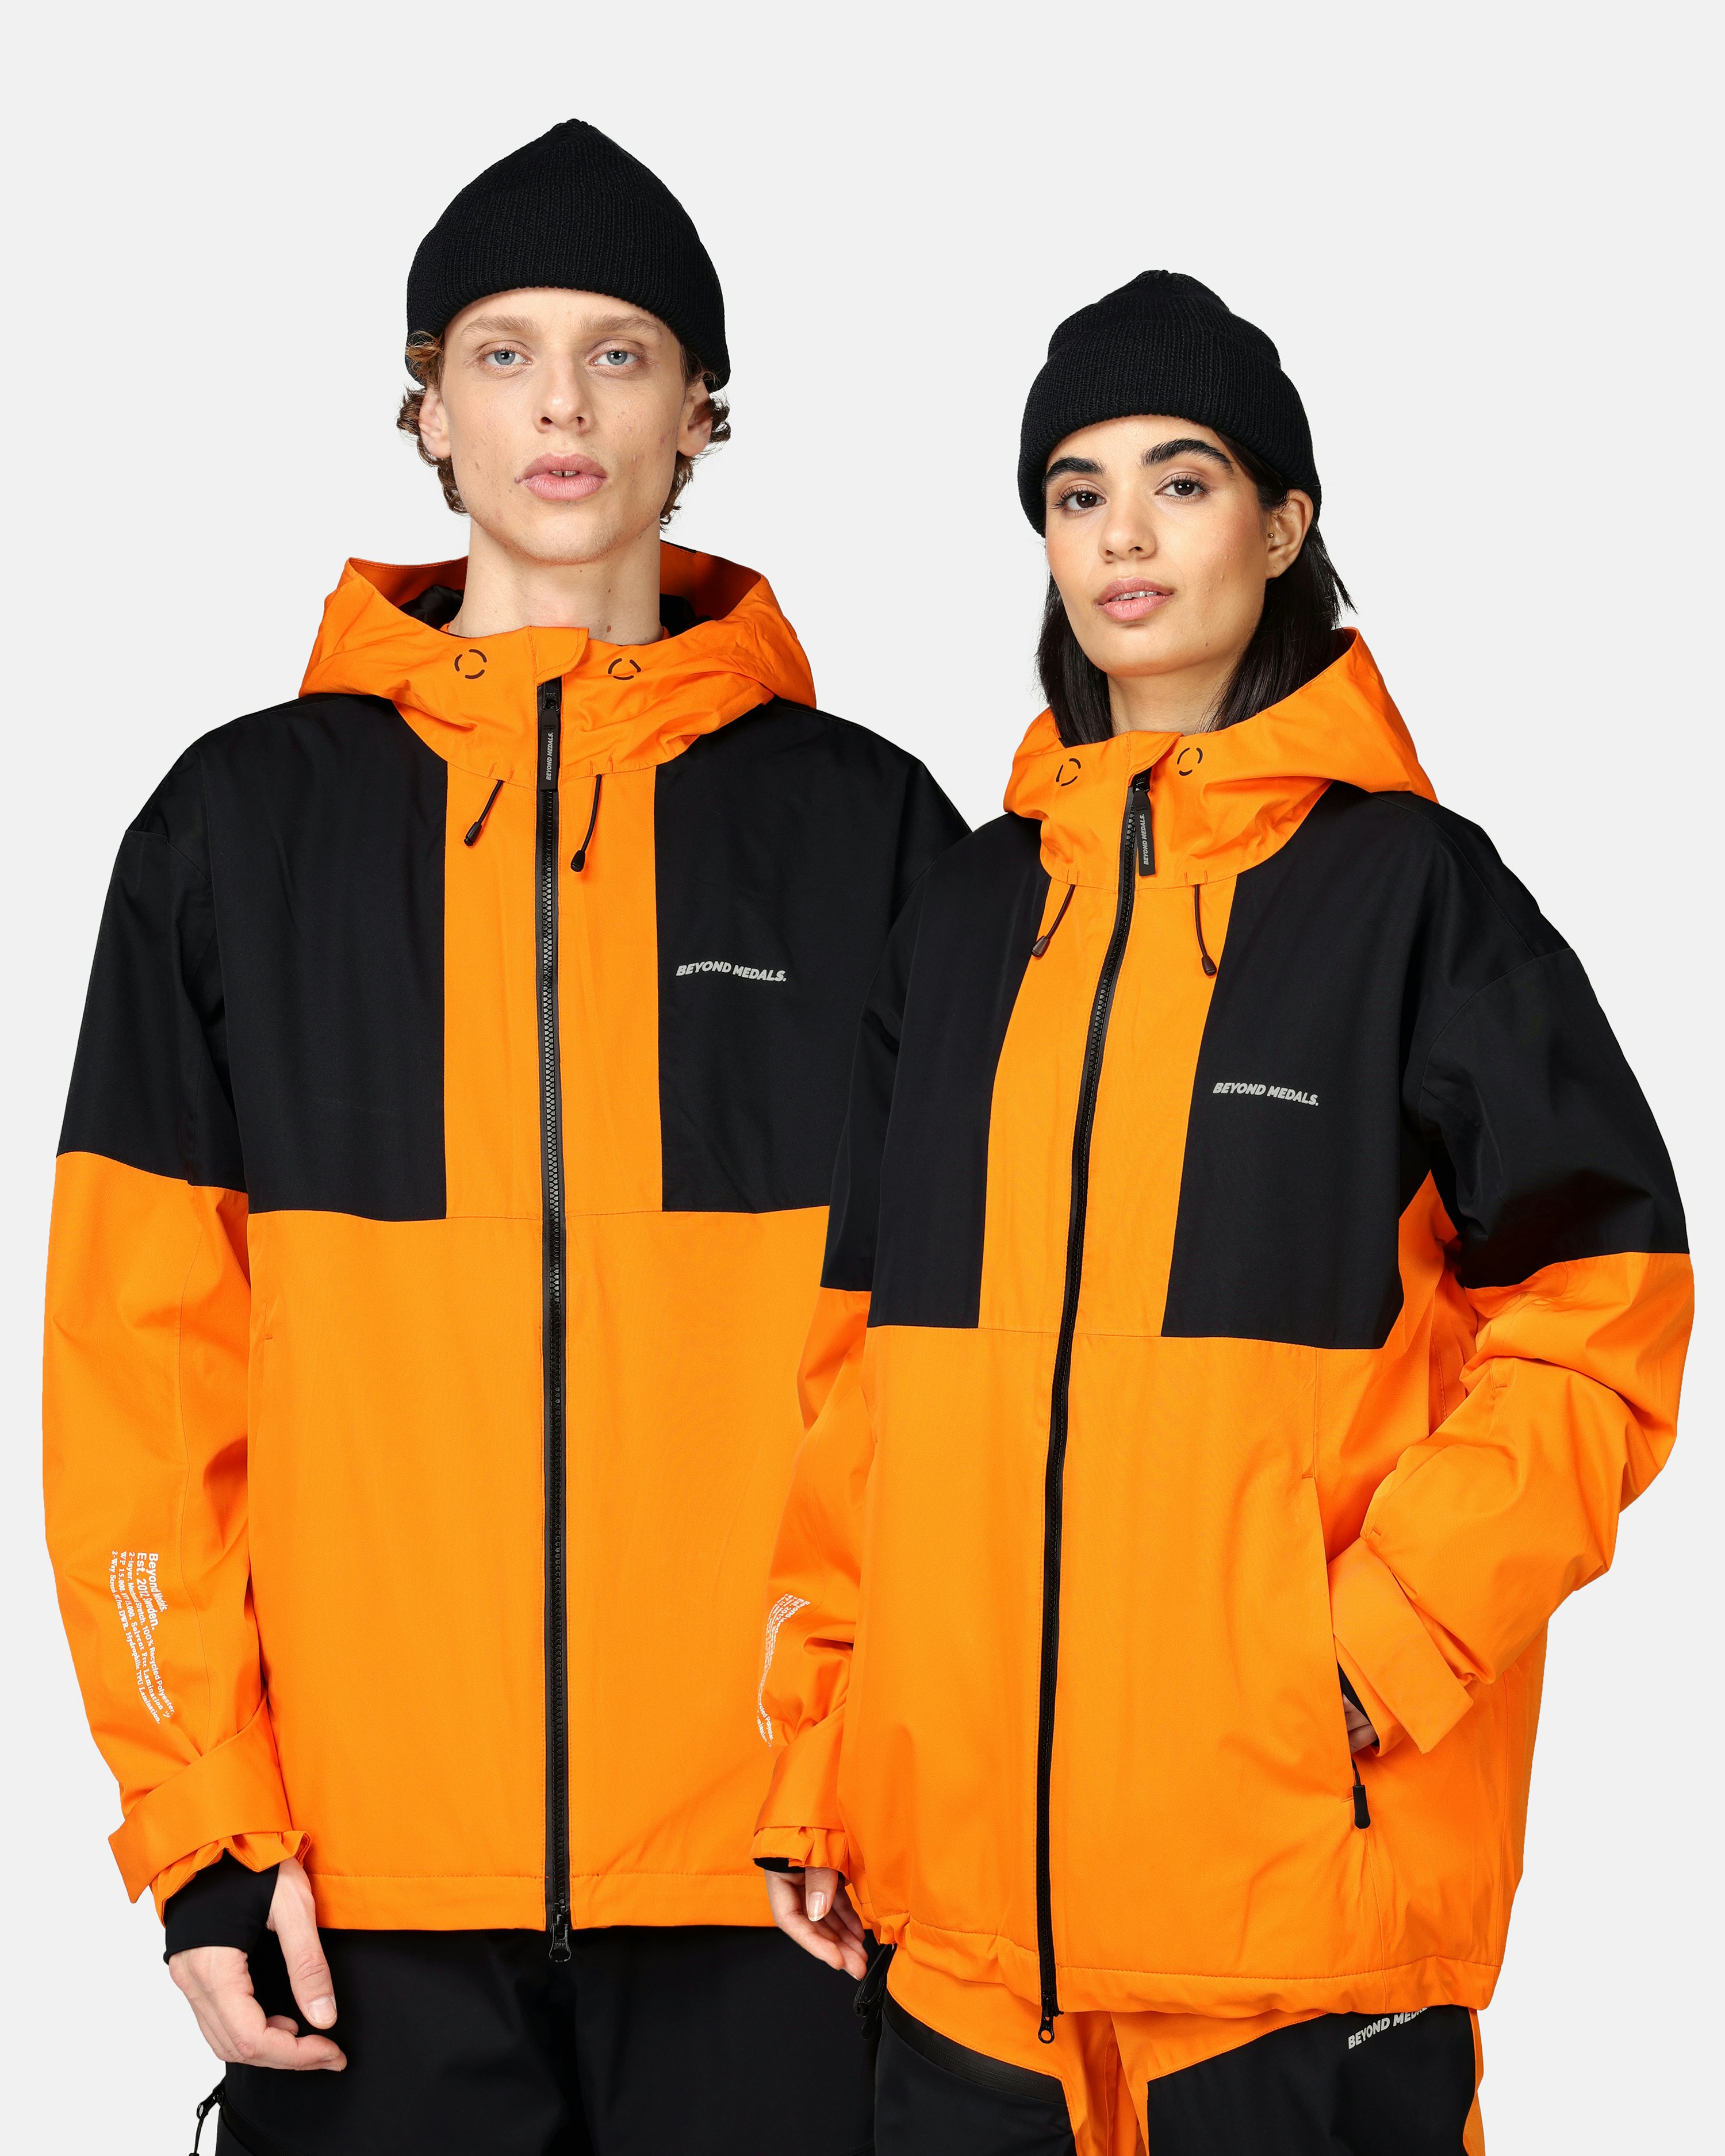 BEYOND MEDALS Jacket - Fullzip Orange | Unisex | Junkyard